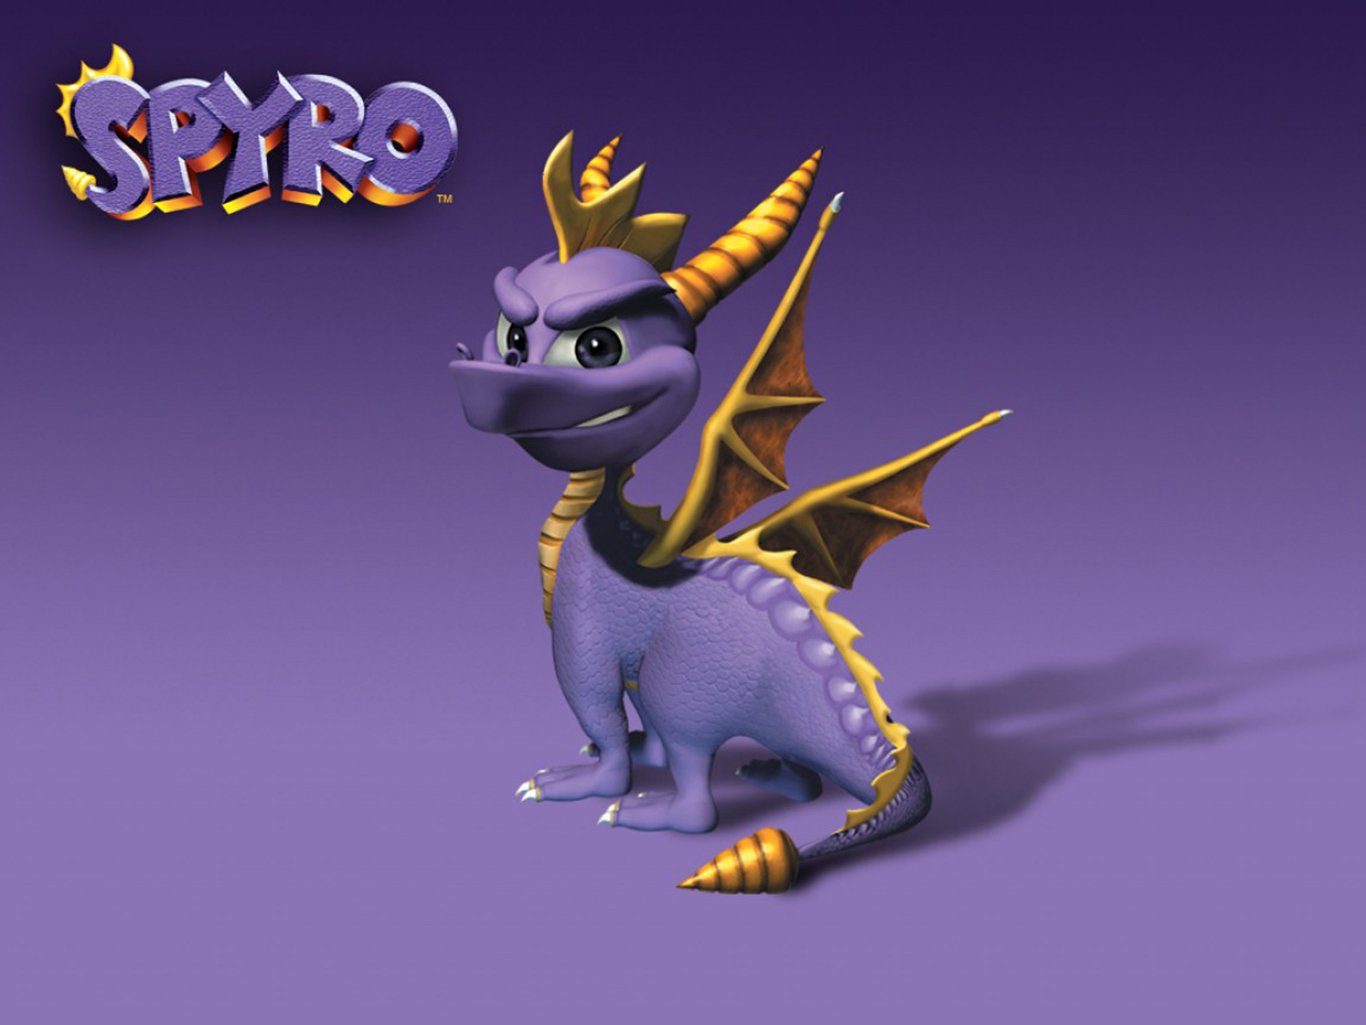 playstation 4 games like spyro the dragon